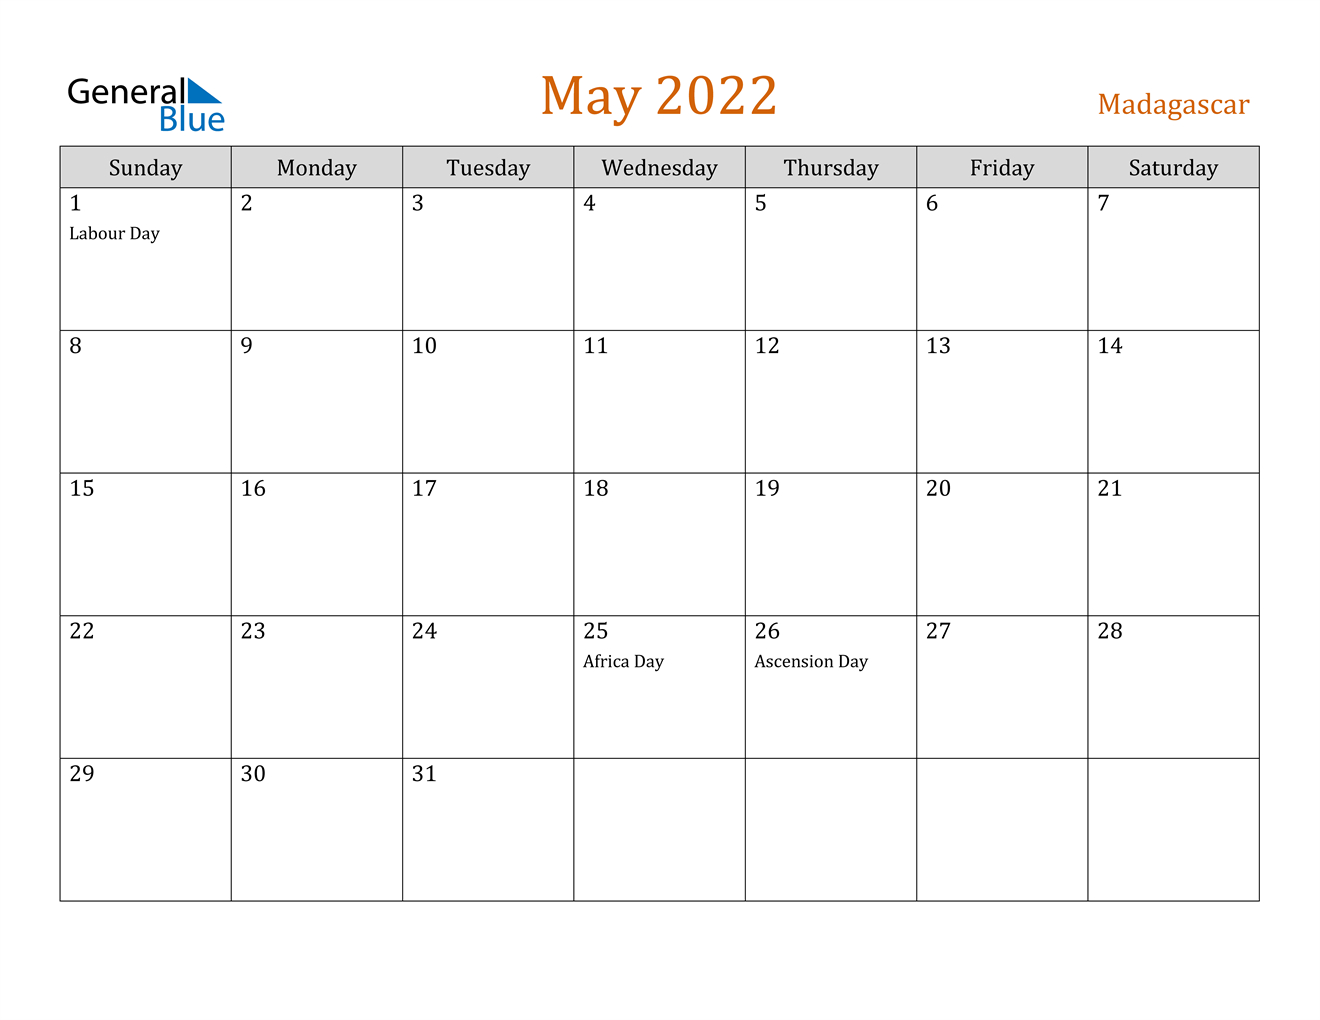 May 2022 Calendar - Madagascar